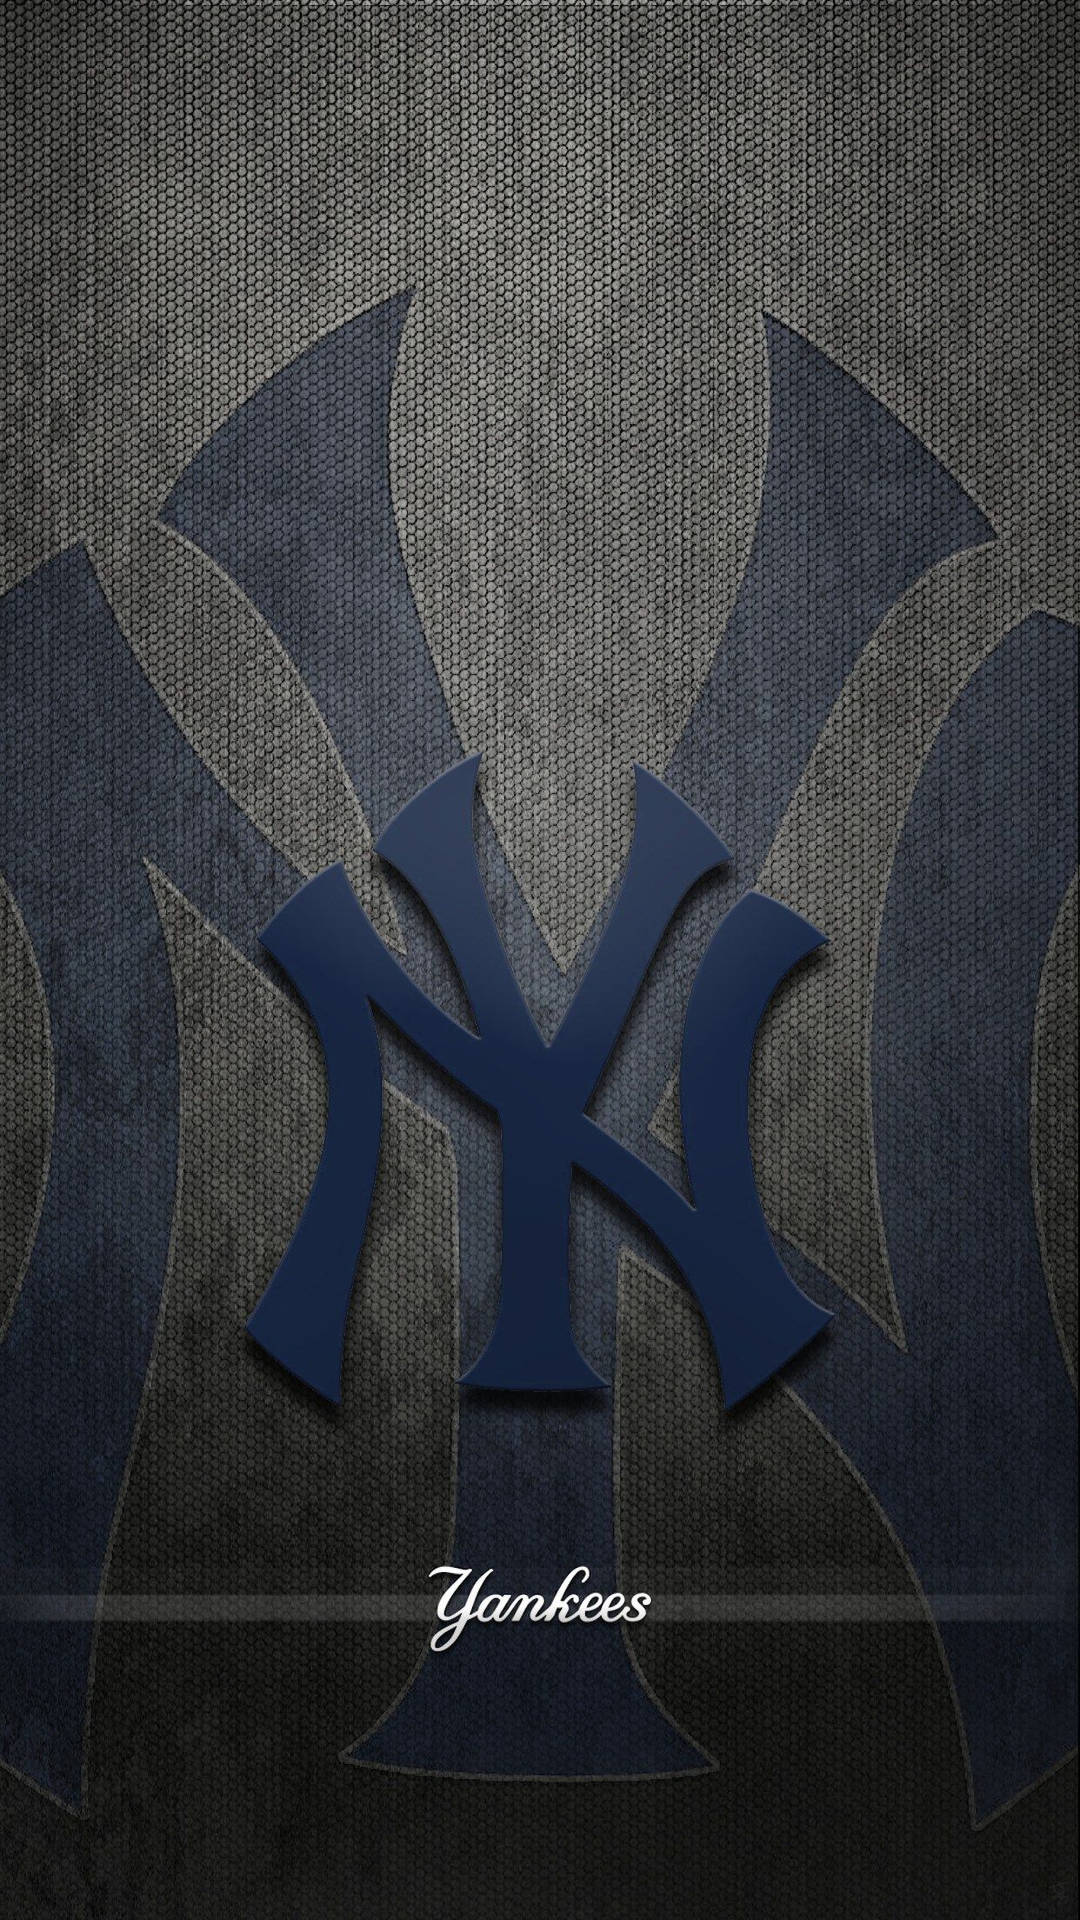 Download New York Yankees Blue Gray NY Logo Wallpaper | Wallpapers.com